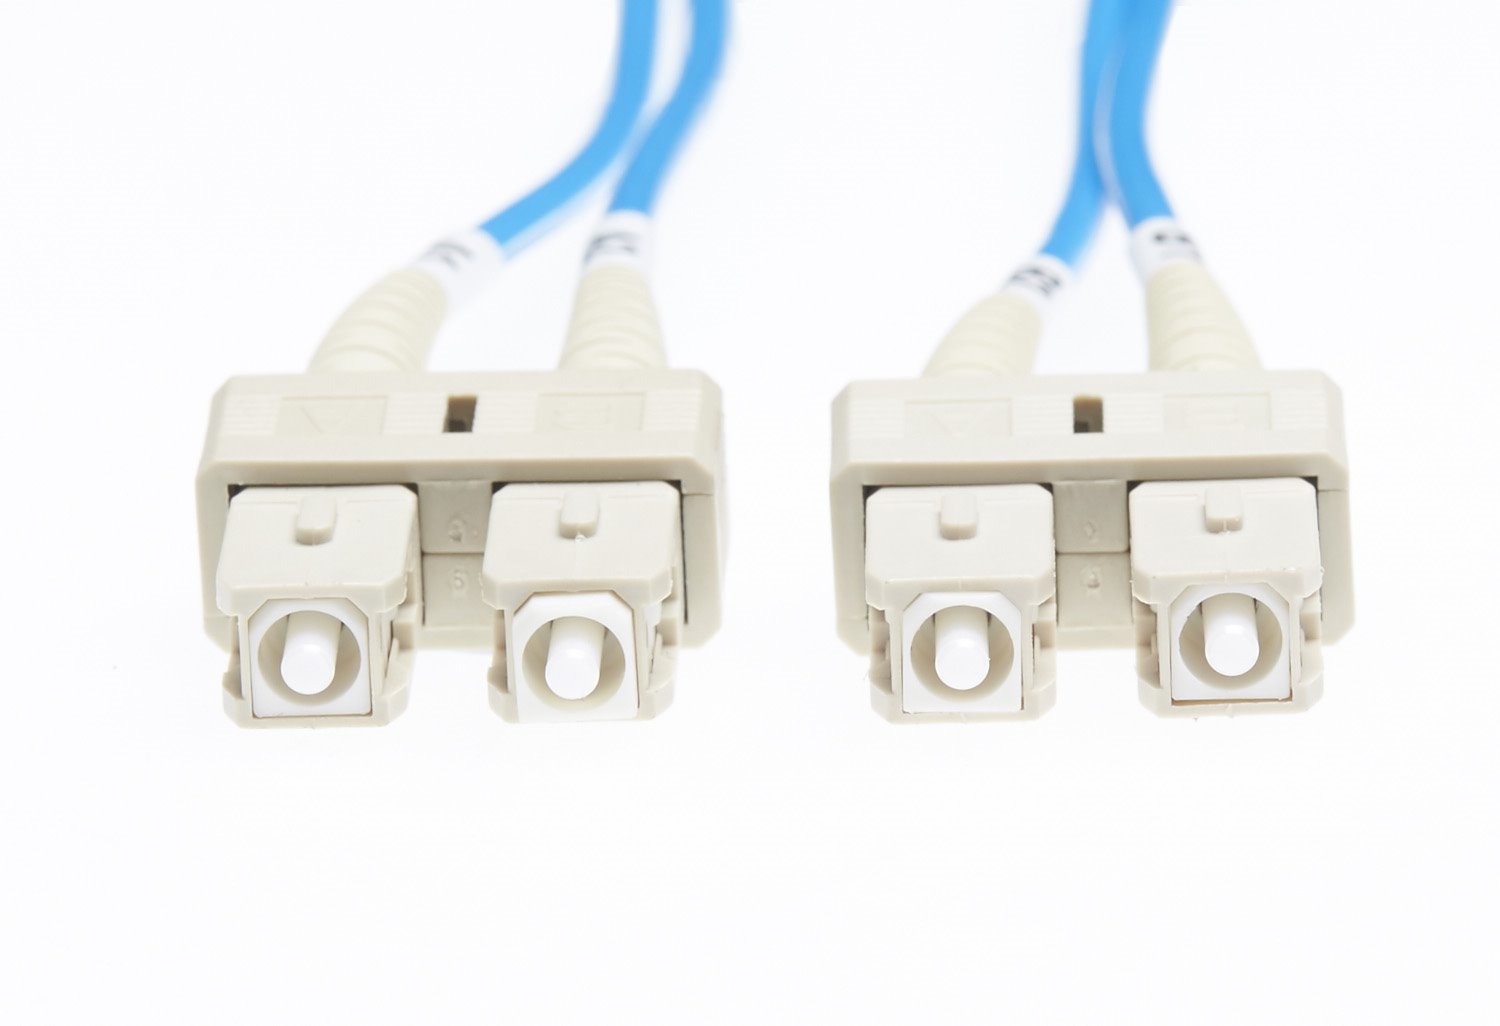 4Cabling 2M SC-SC Om1 Multimode Fibre Optic Cable: Blue